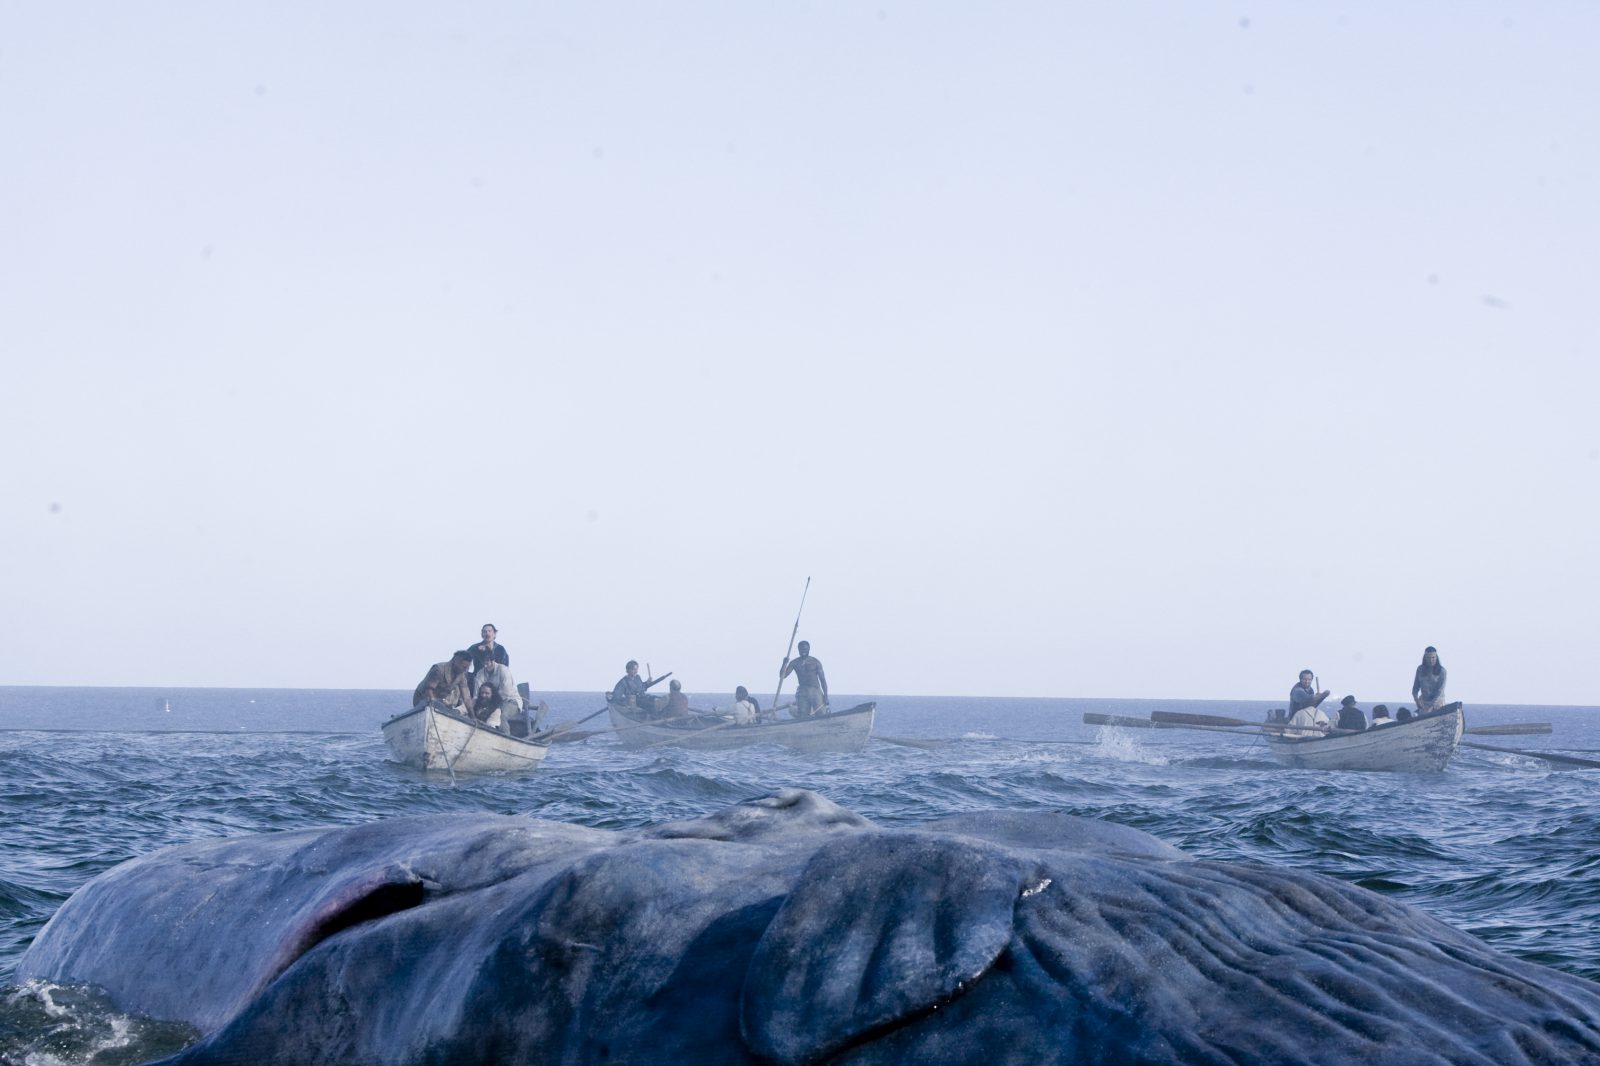 Ocean scene featuring whale 